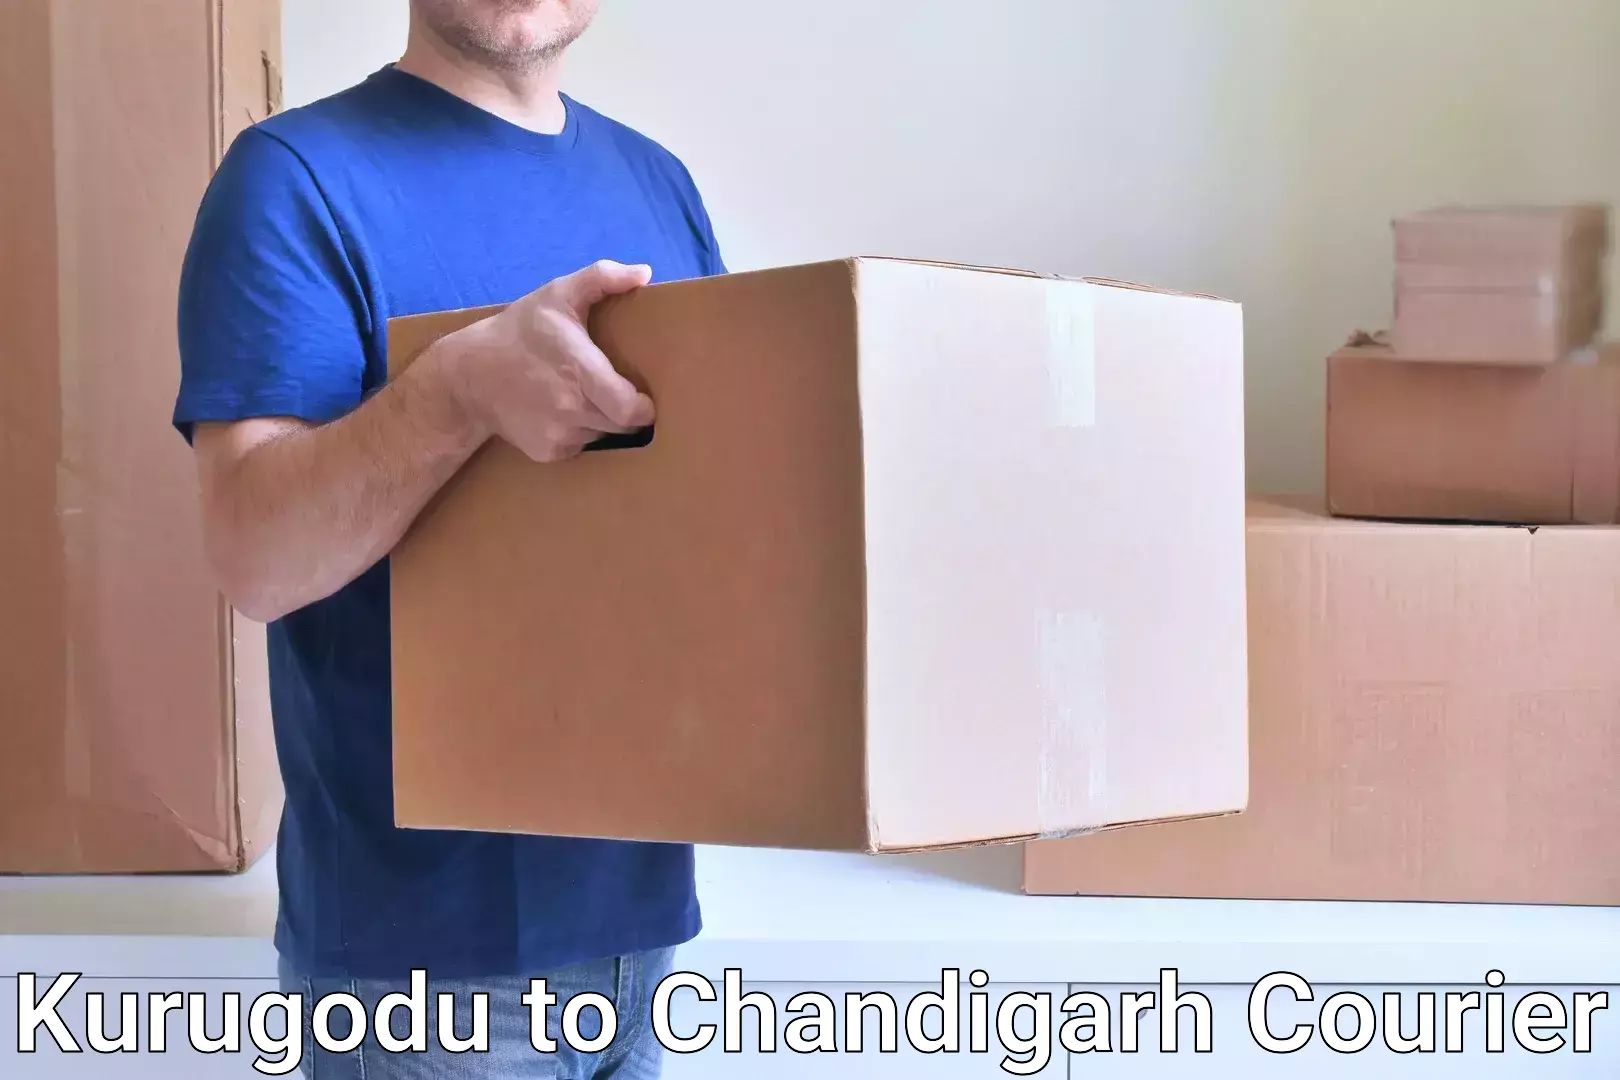 Nationwide delivery network Kurugodu to Chandigarh